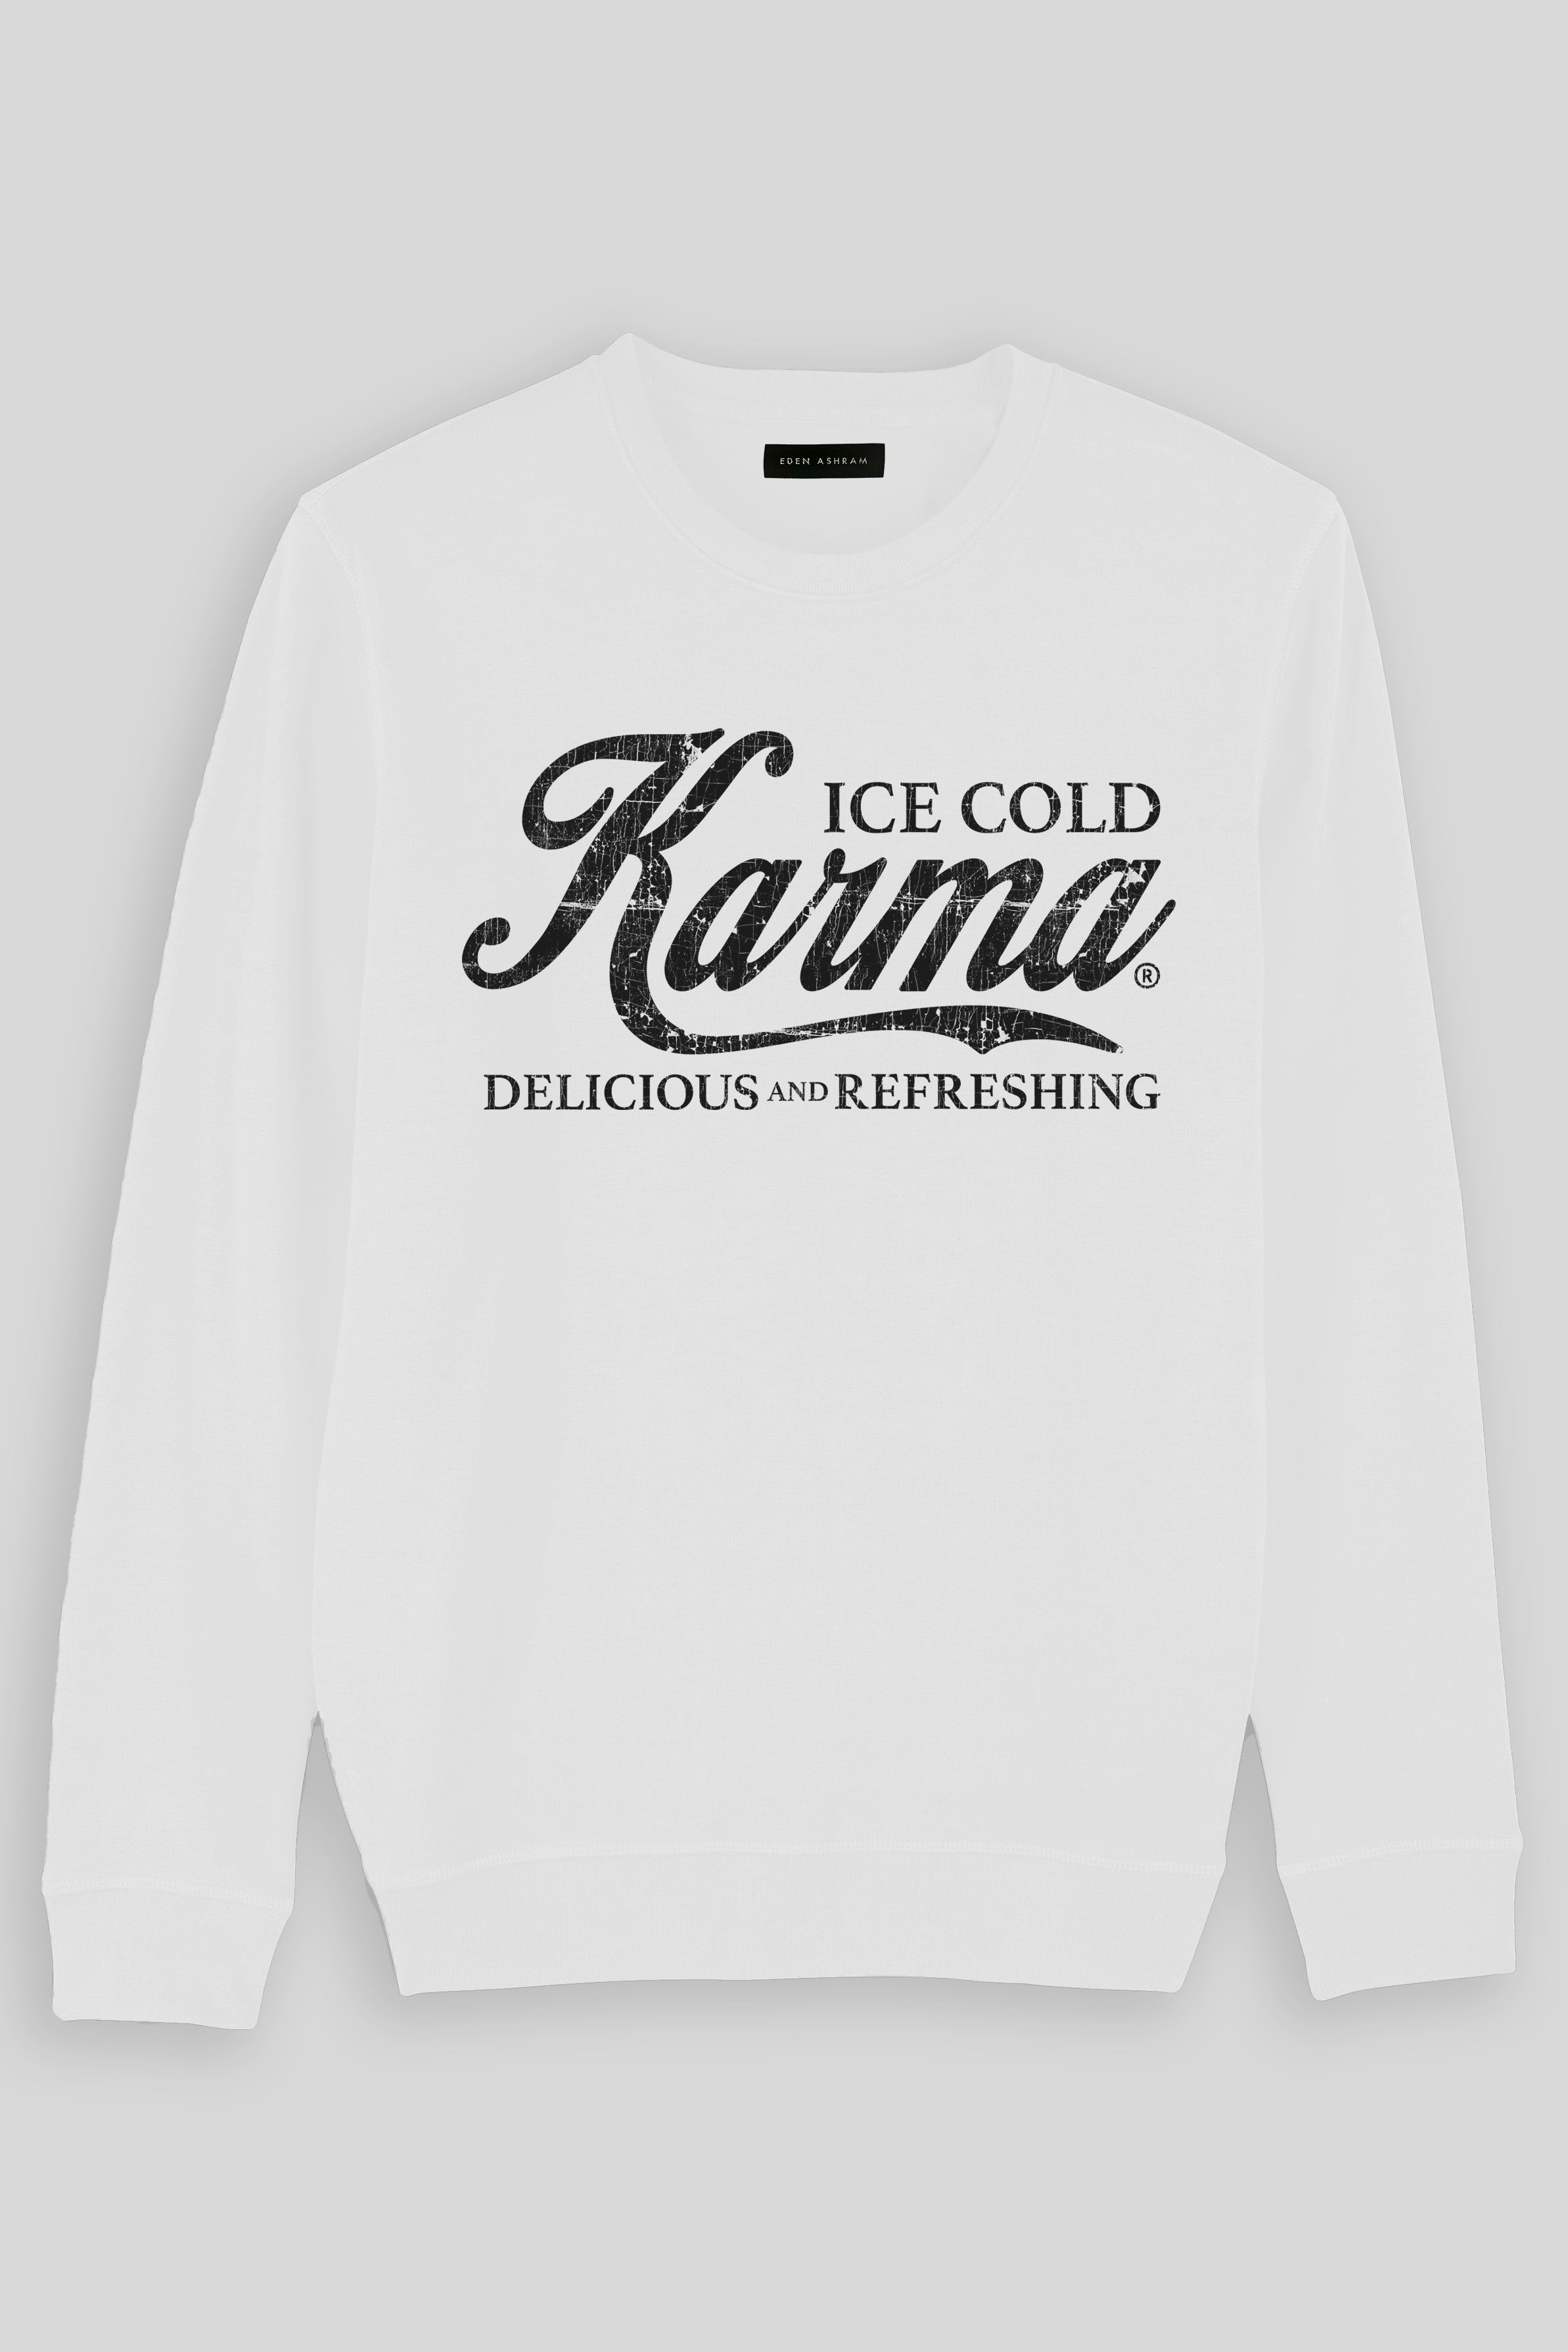 Eden Ashram Ice Cold Karma Premium Crew Neck Sweatshirt White